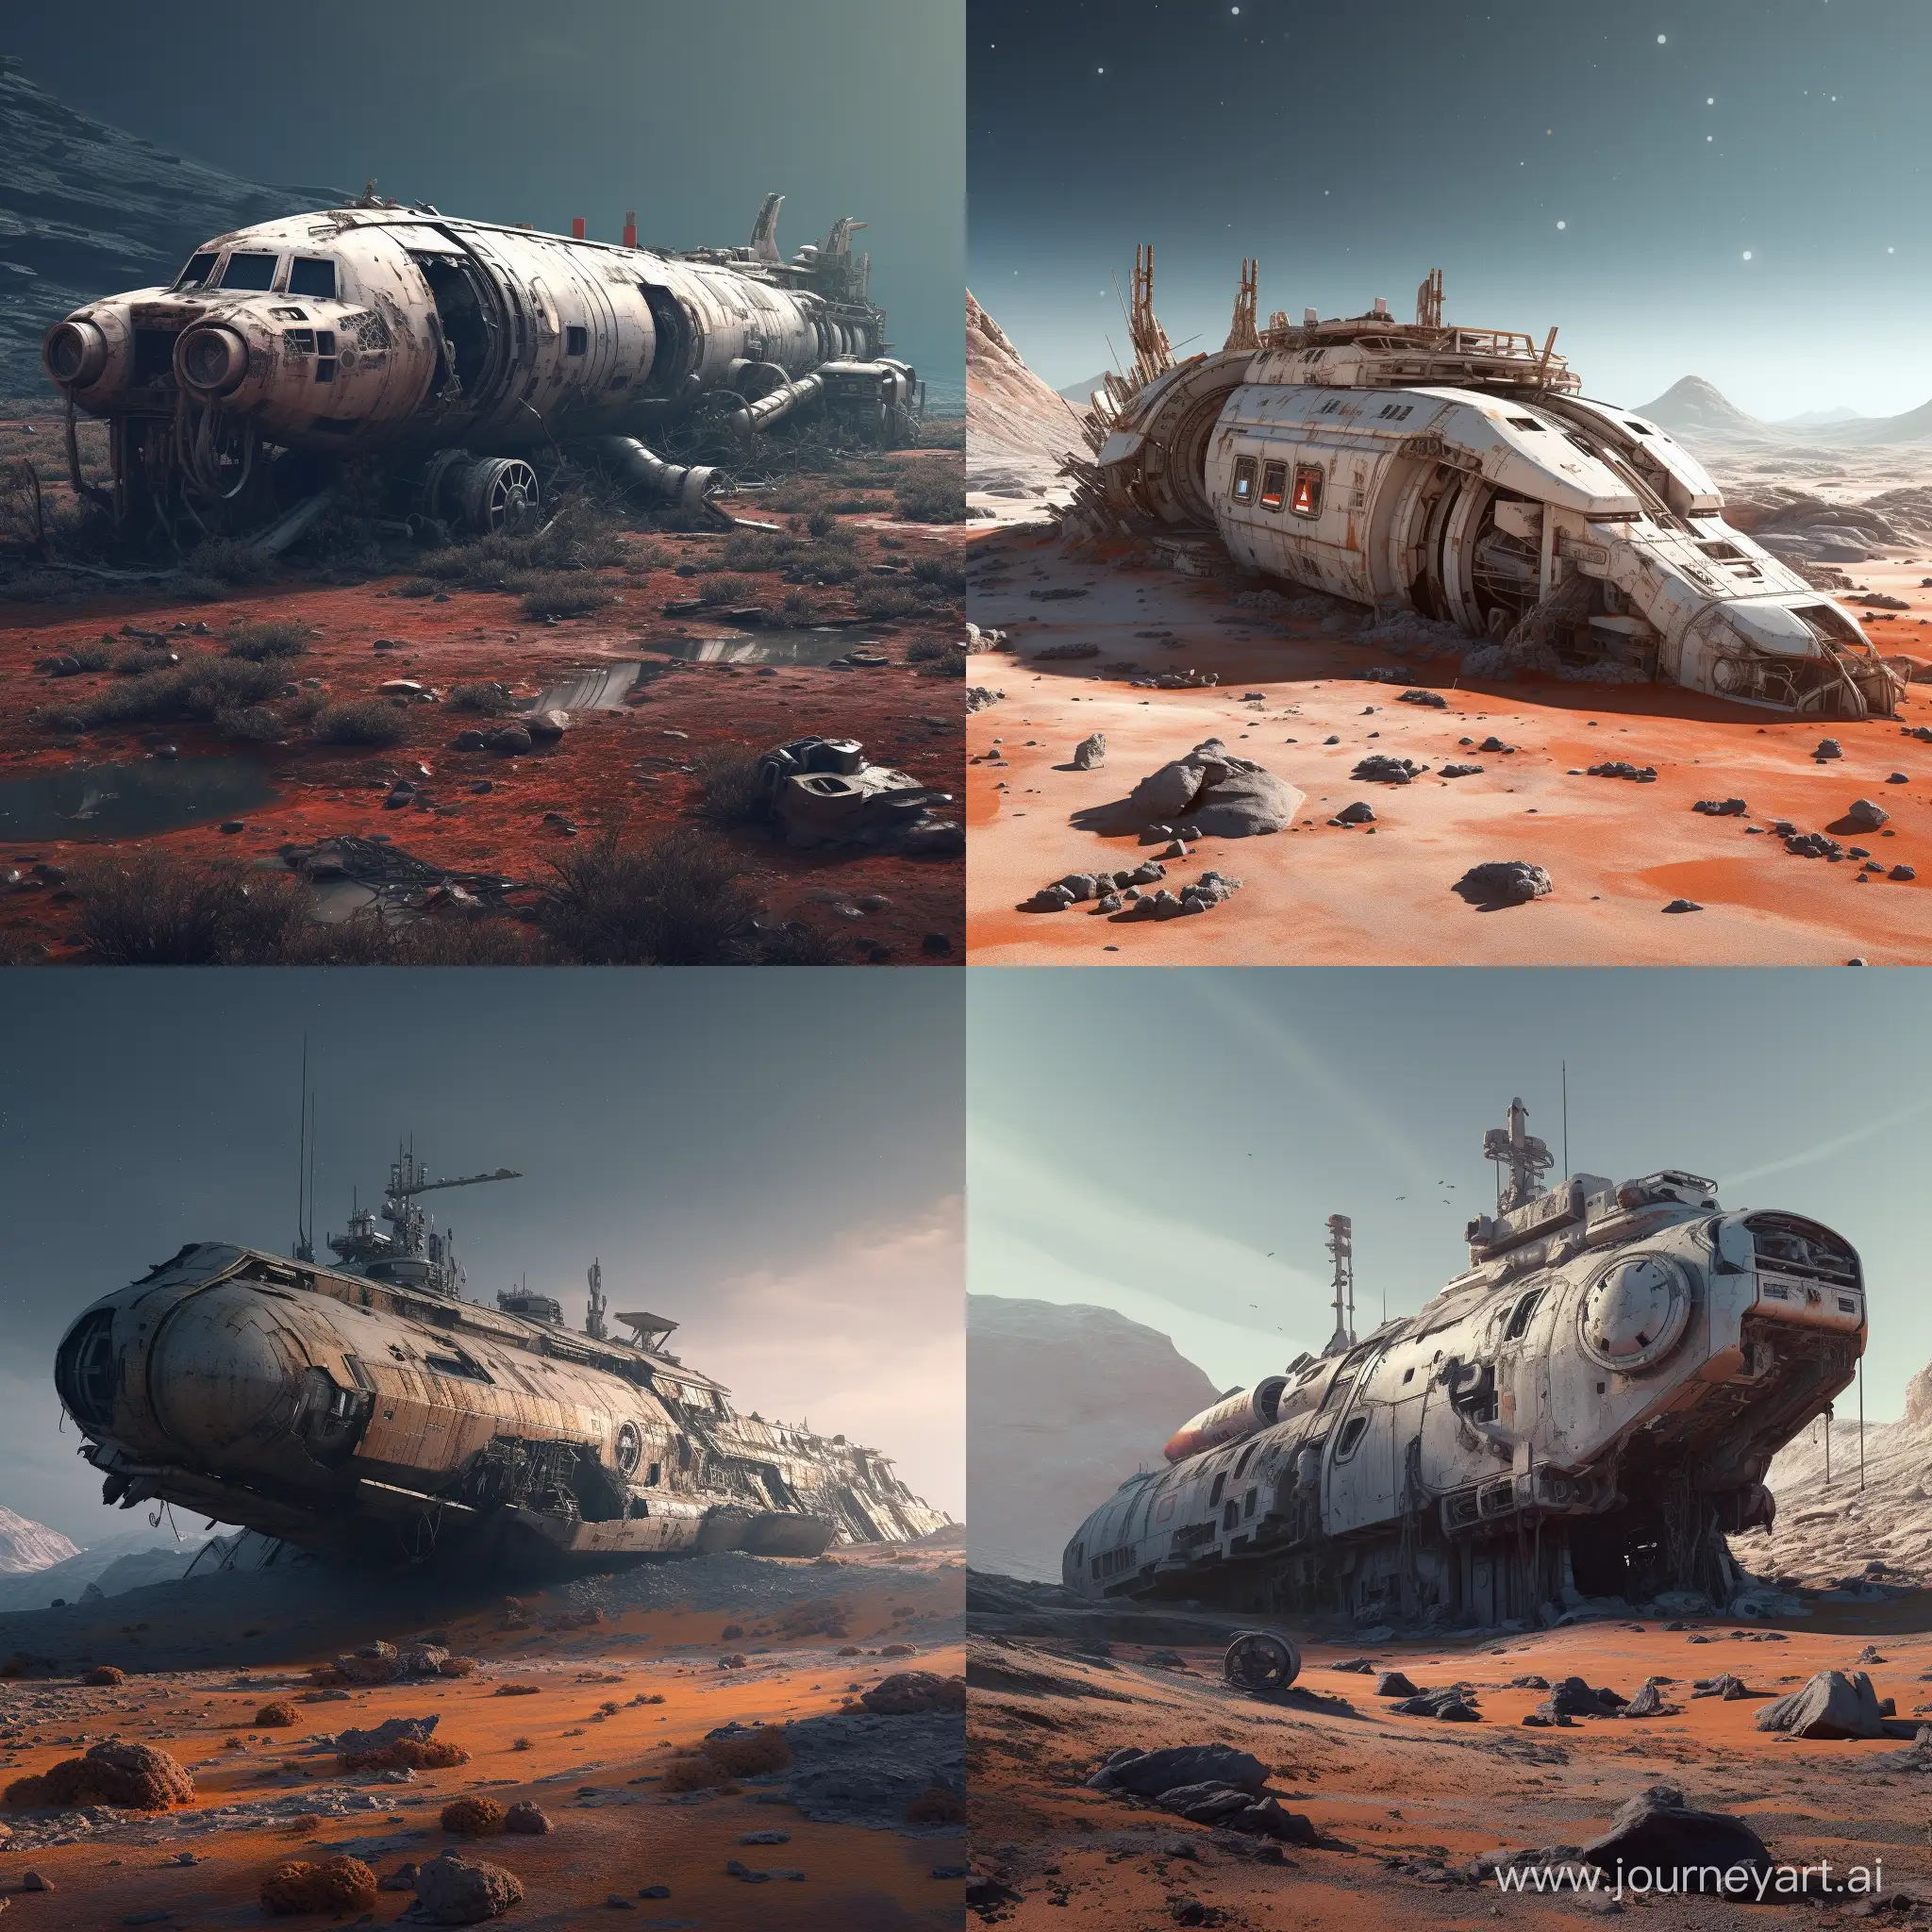 Abandoned-Retrofuturistic-Spaceship-on-Desolate-Planet